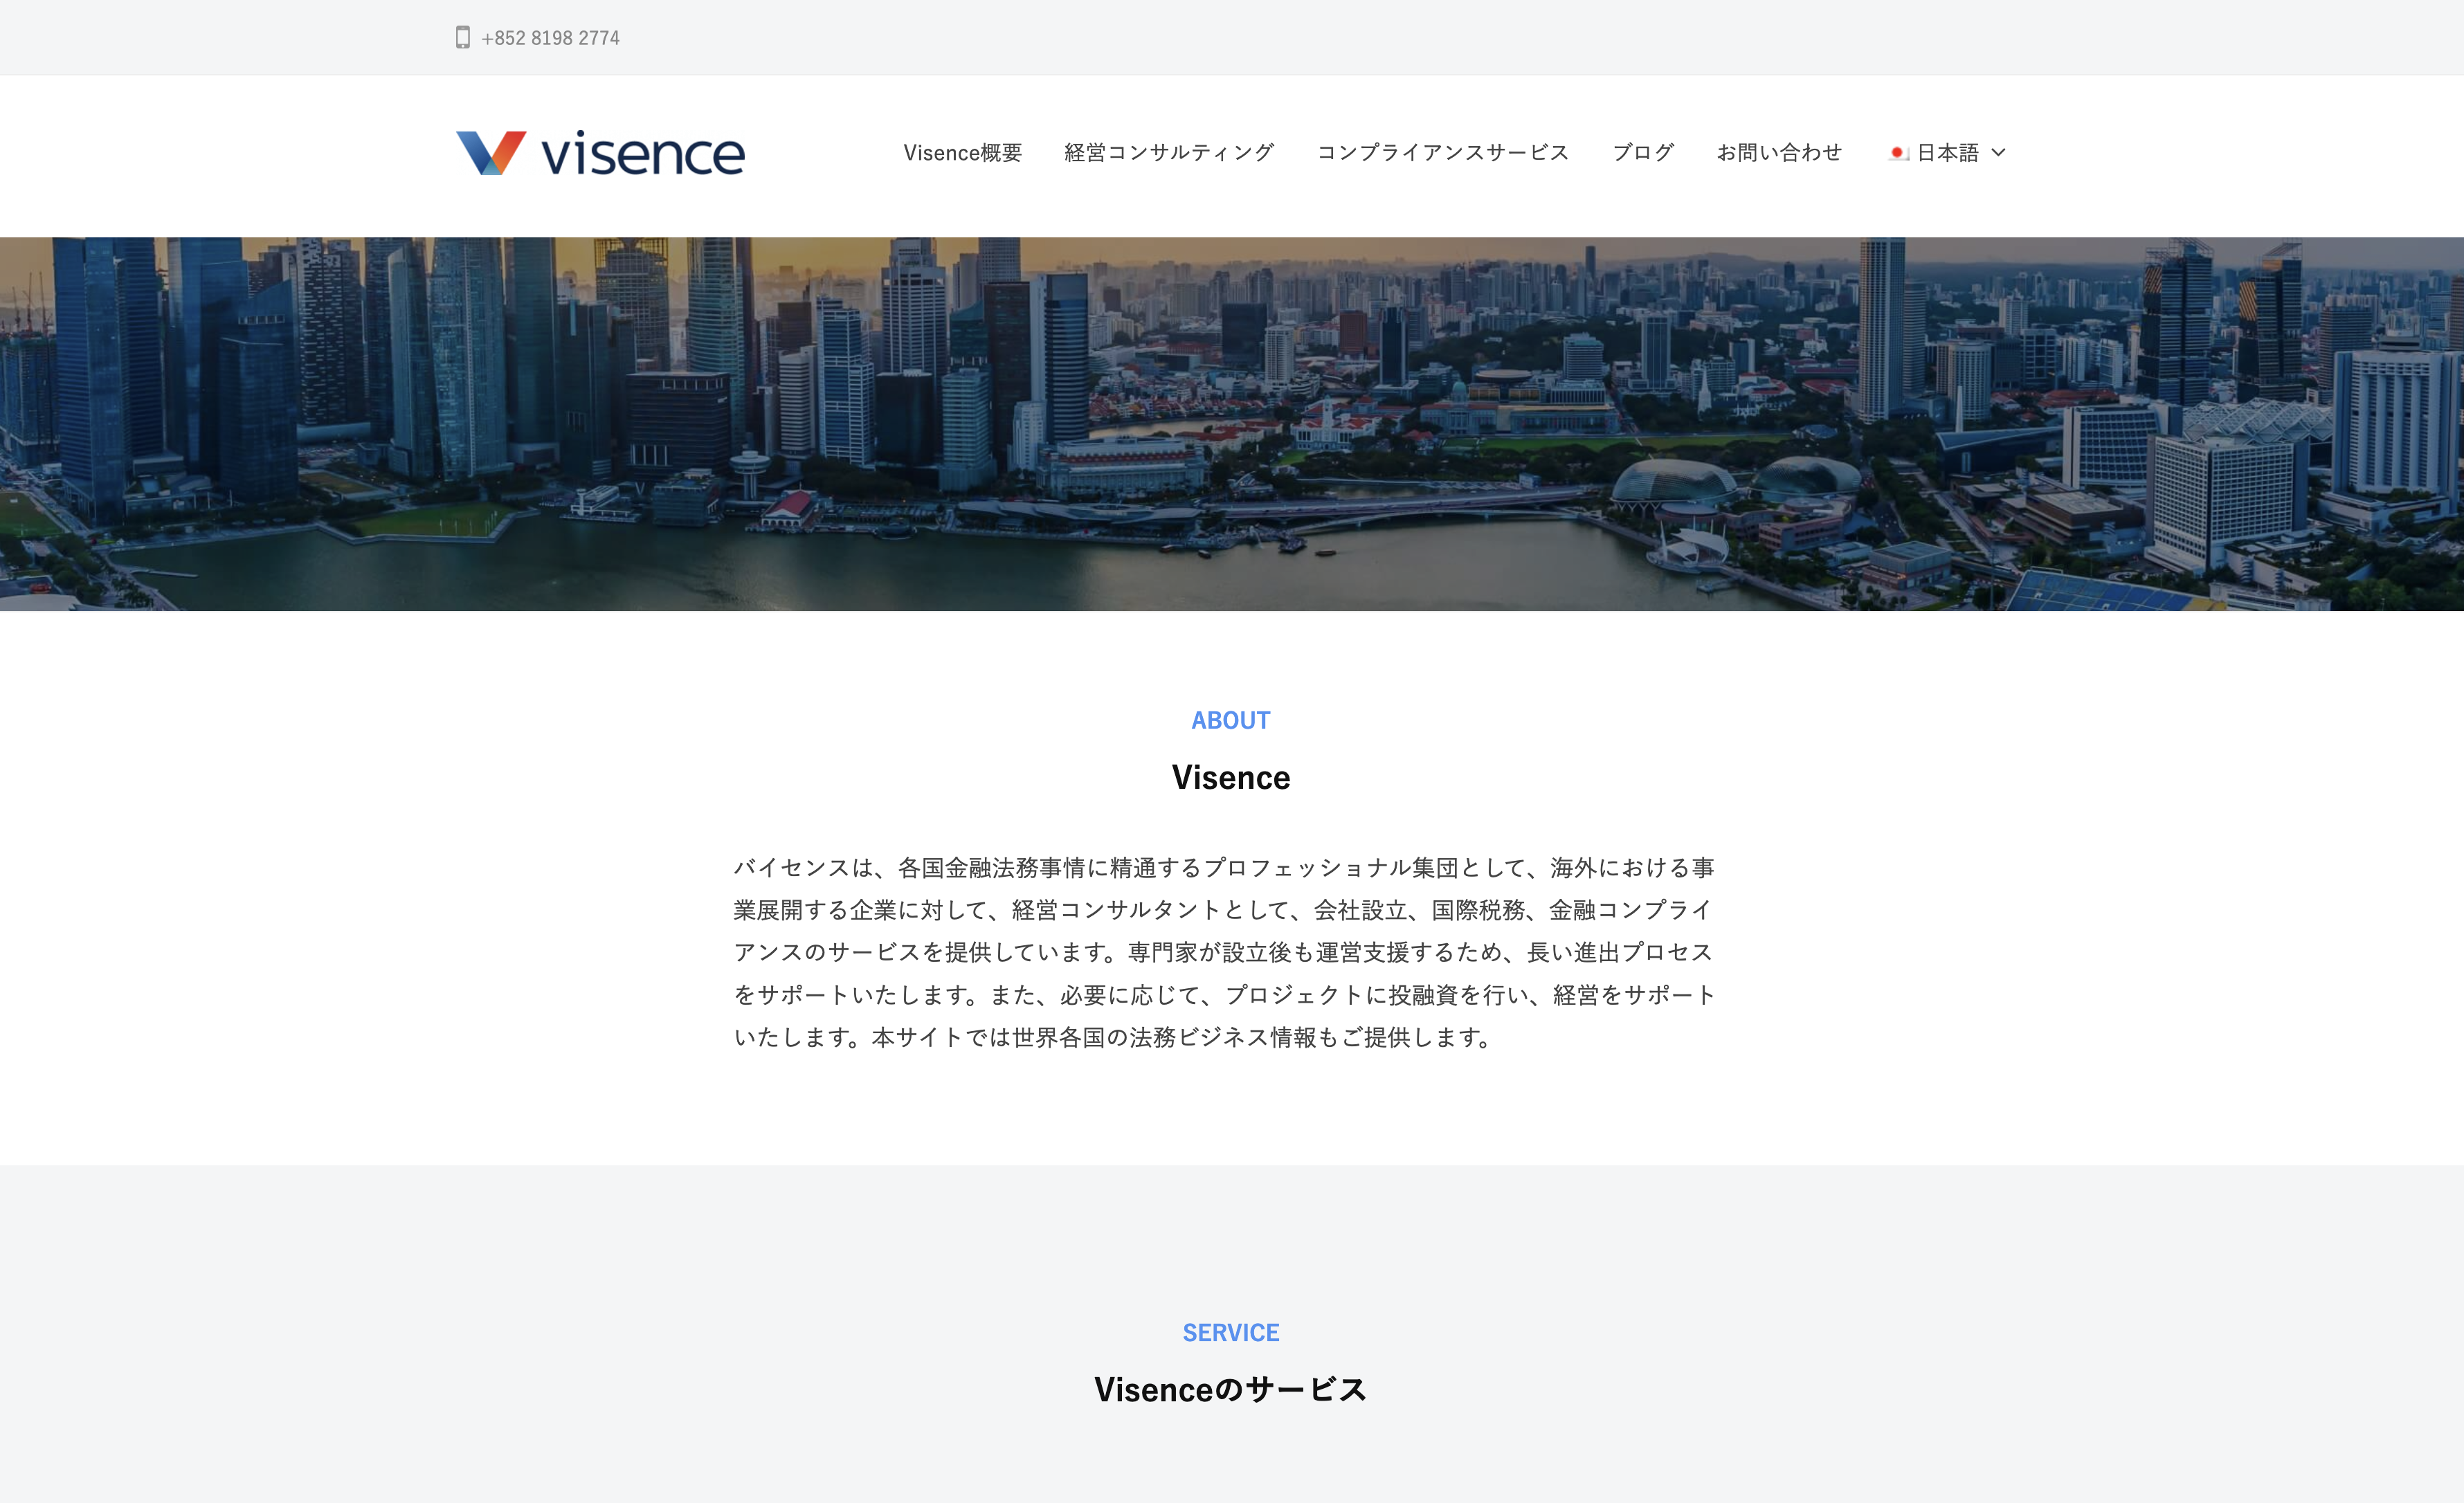 Visence Professional Services 合同会社のVisence Professional Services合同会社:行政書士サービス